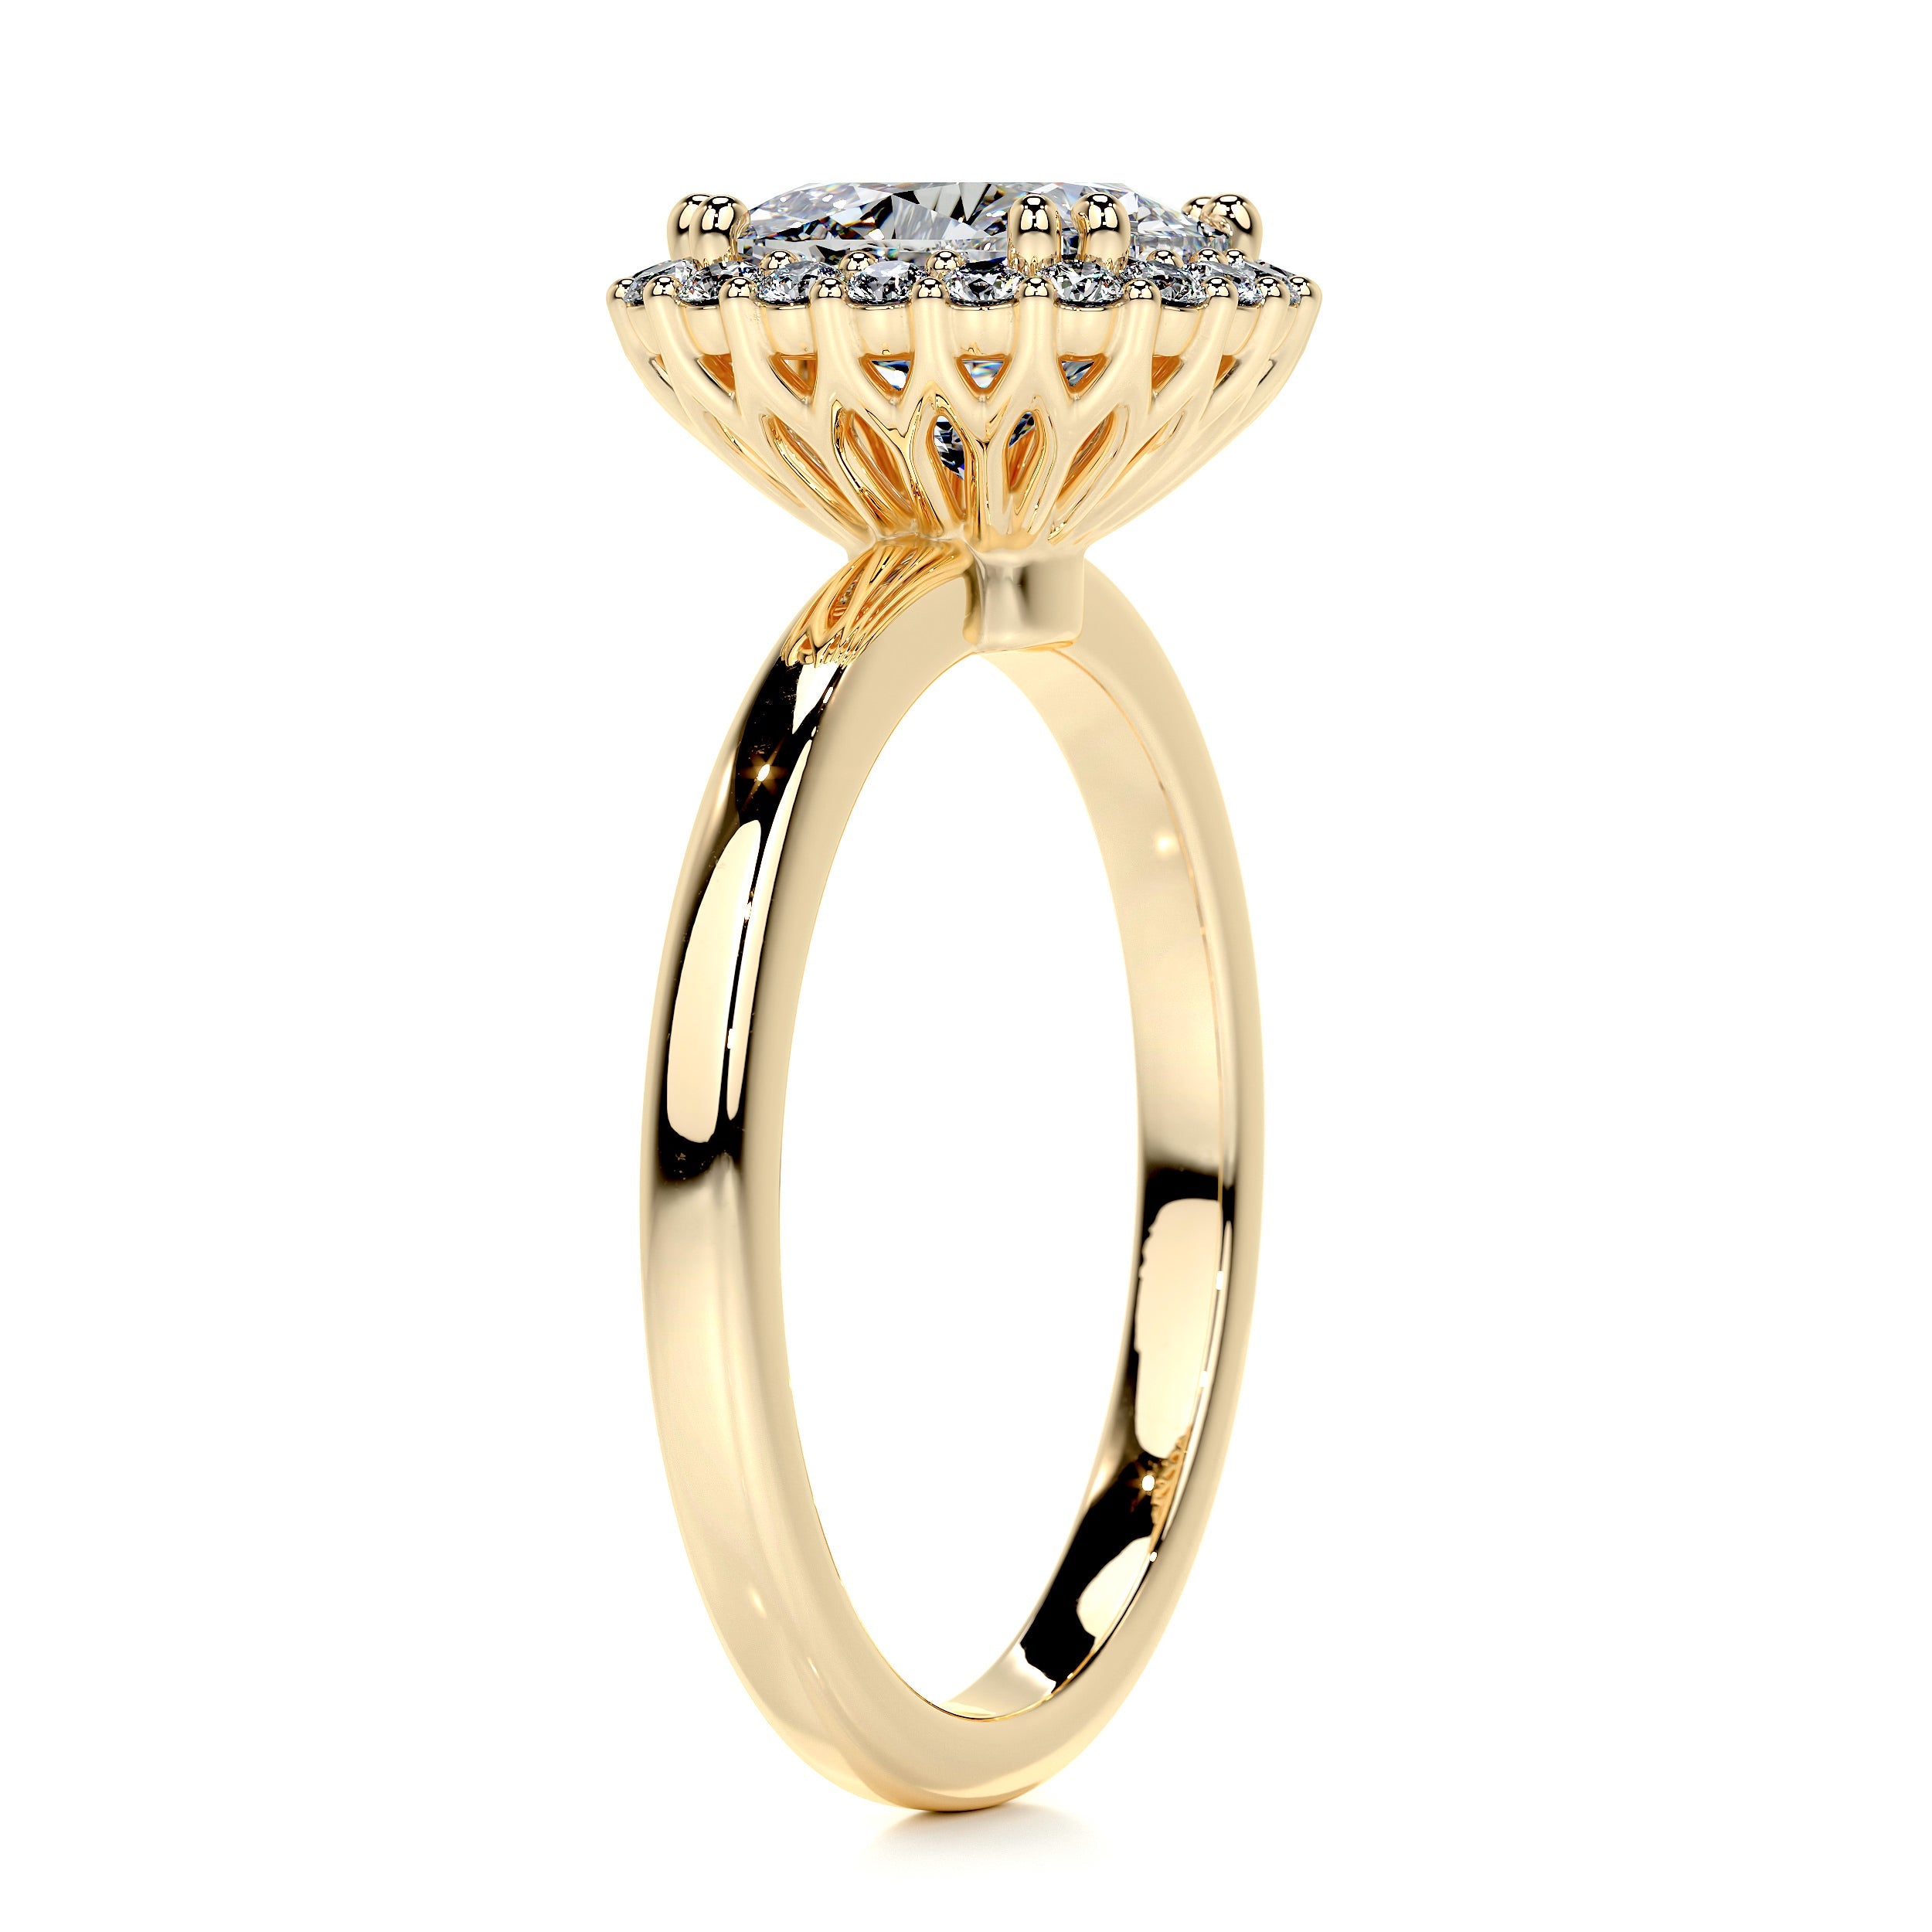 Bailey Diamond Engagement Ring -18K Yellow Gold